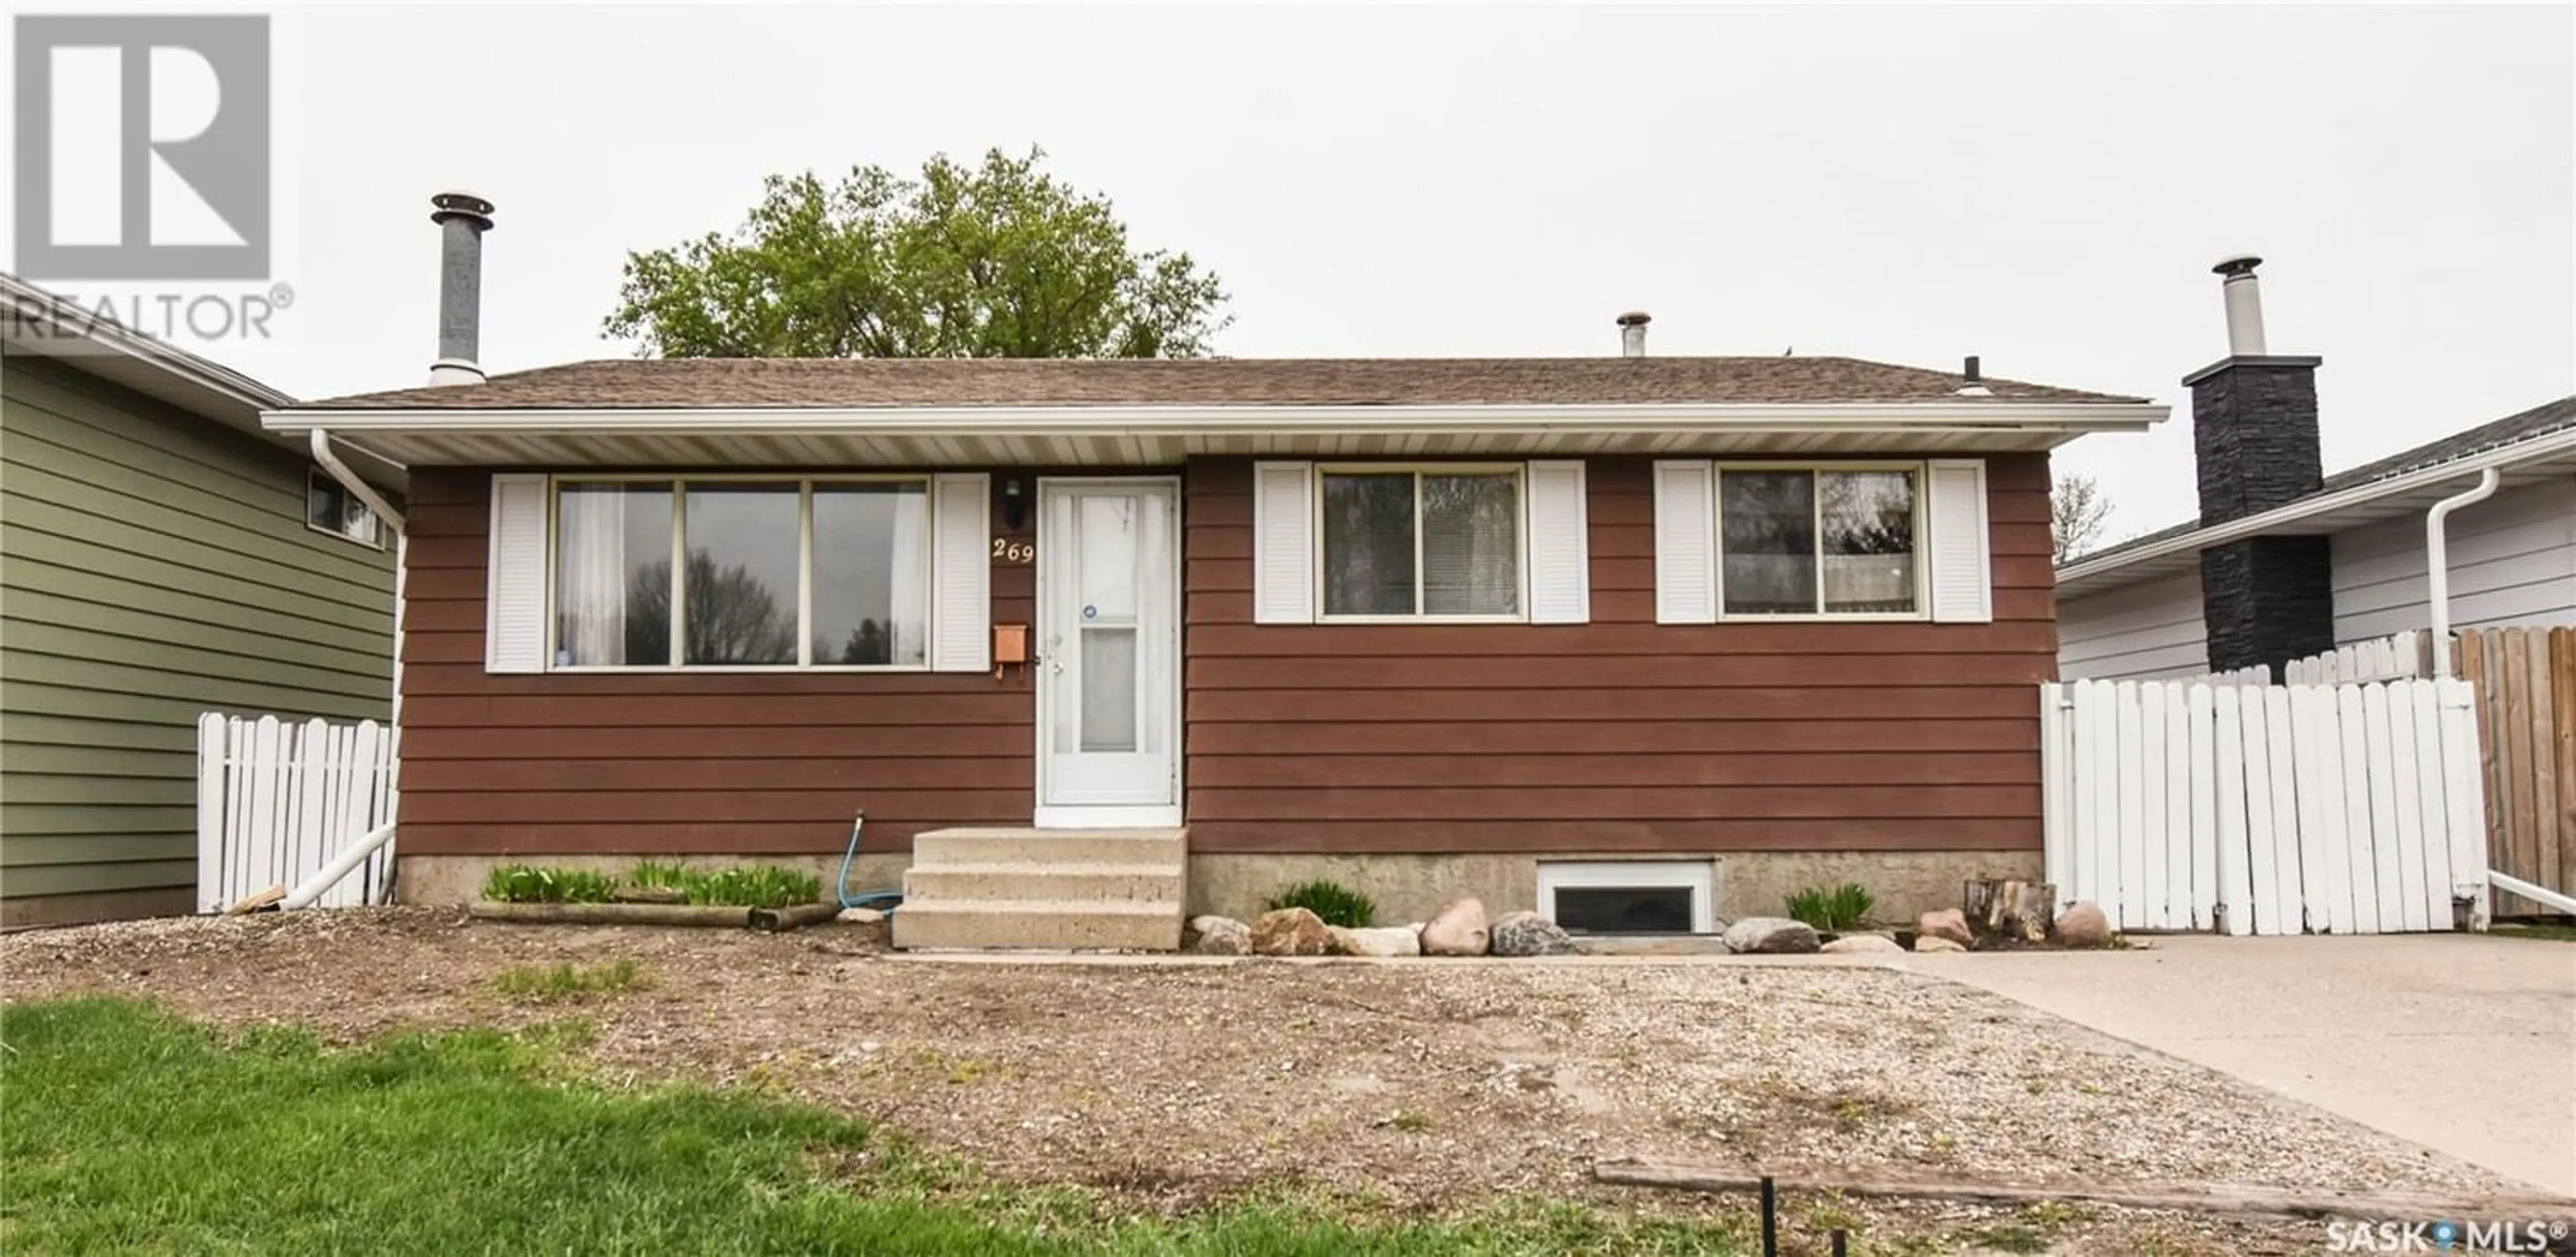 Home with vinyl exterior material for 269 Meighen CRESCENT, Saskatoon Saskatchewan S7L4W4